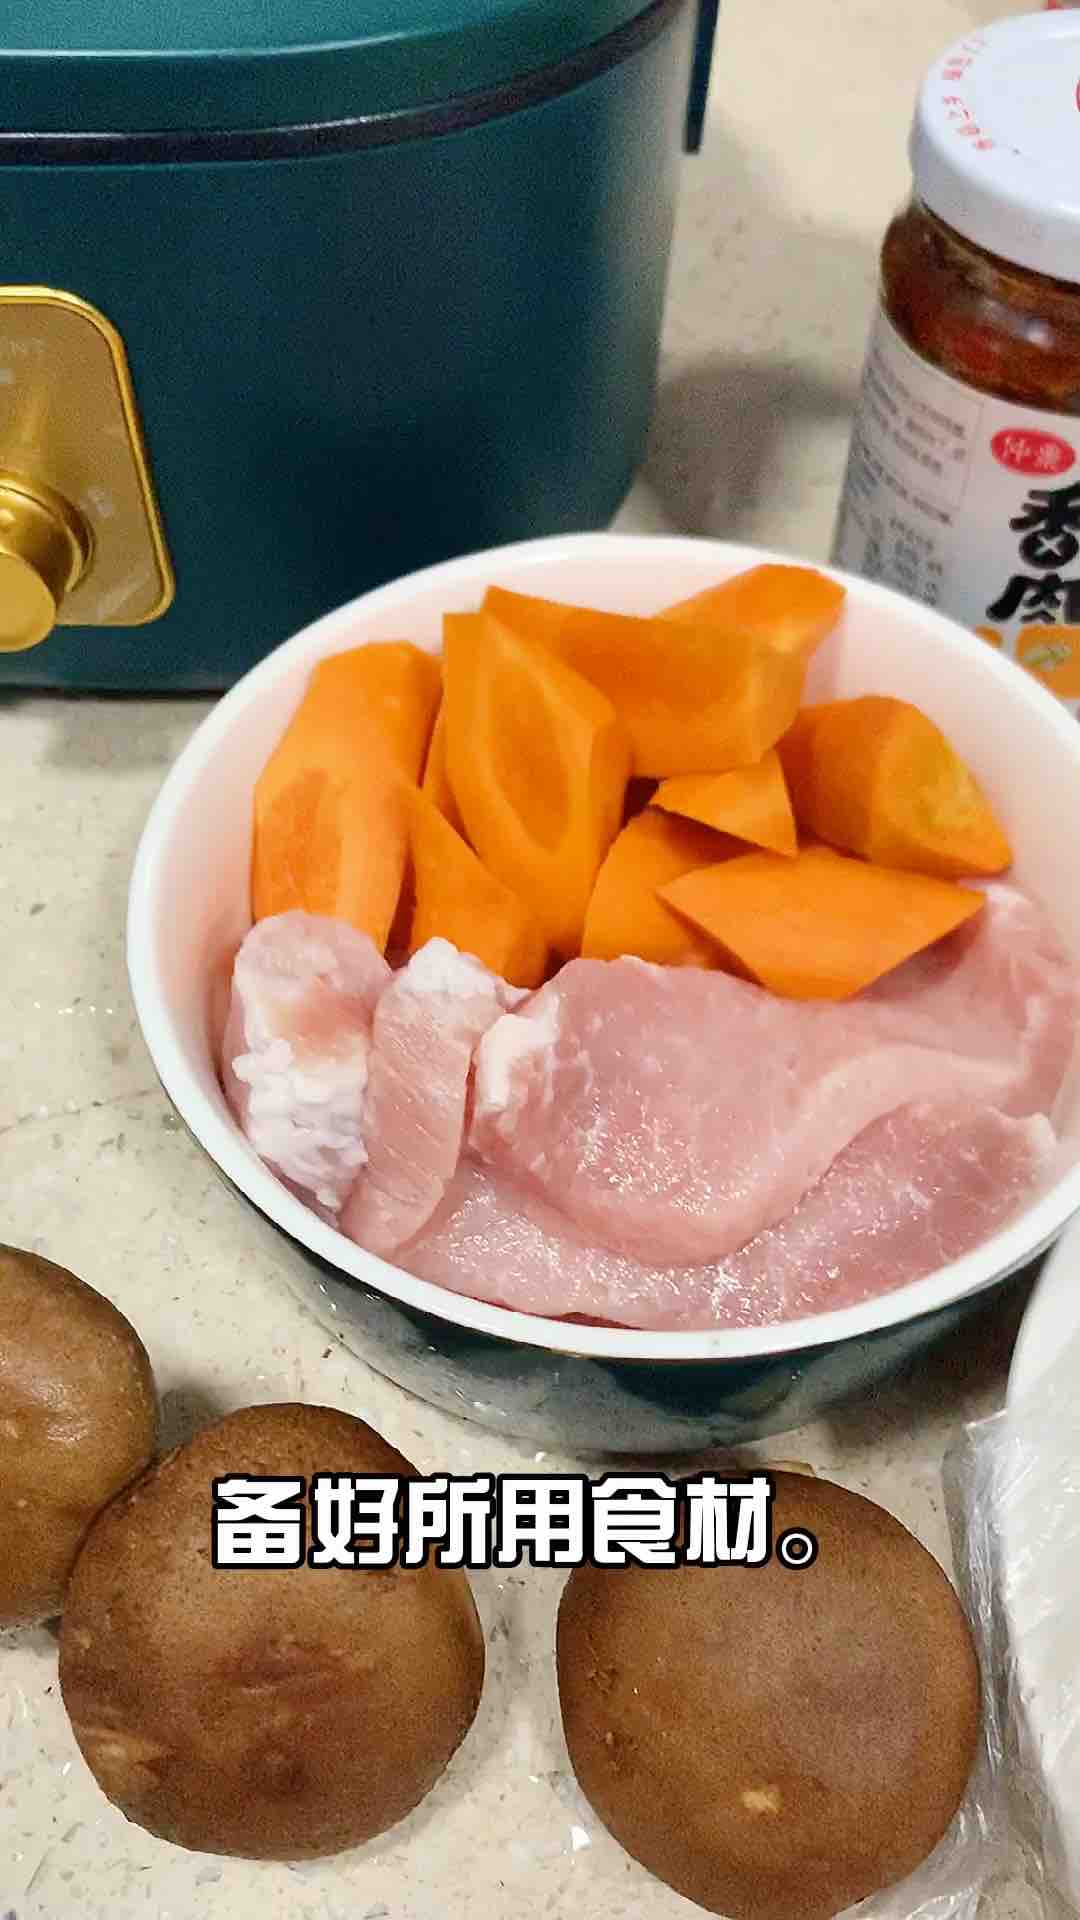 Carrot Dumplings with Sauce recipe